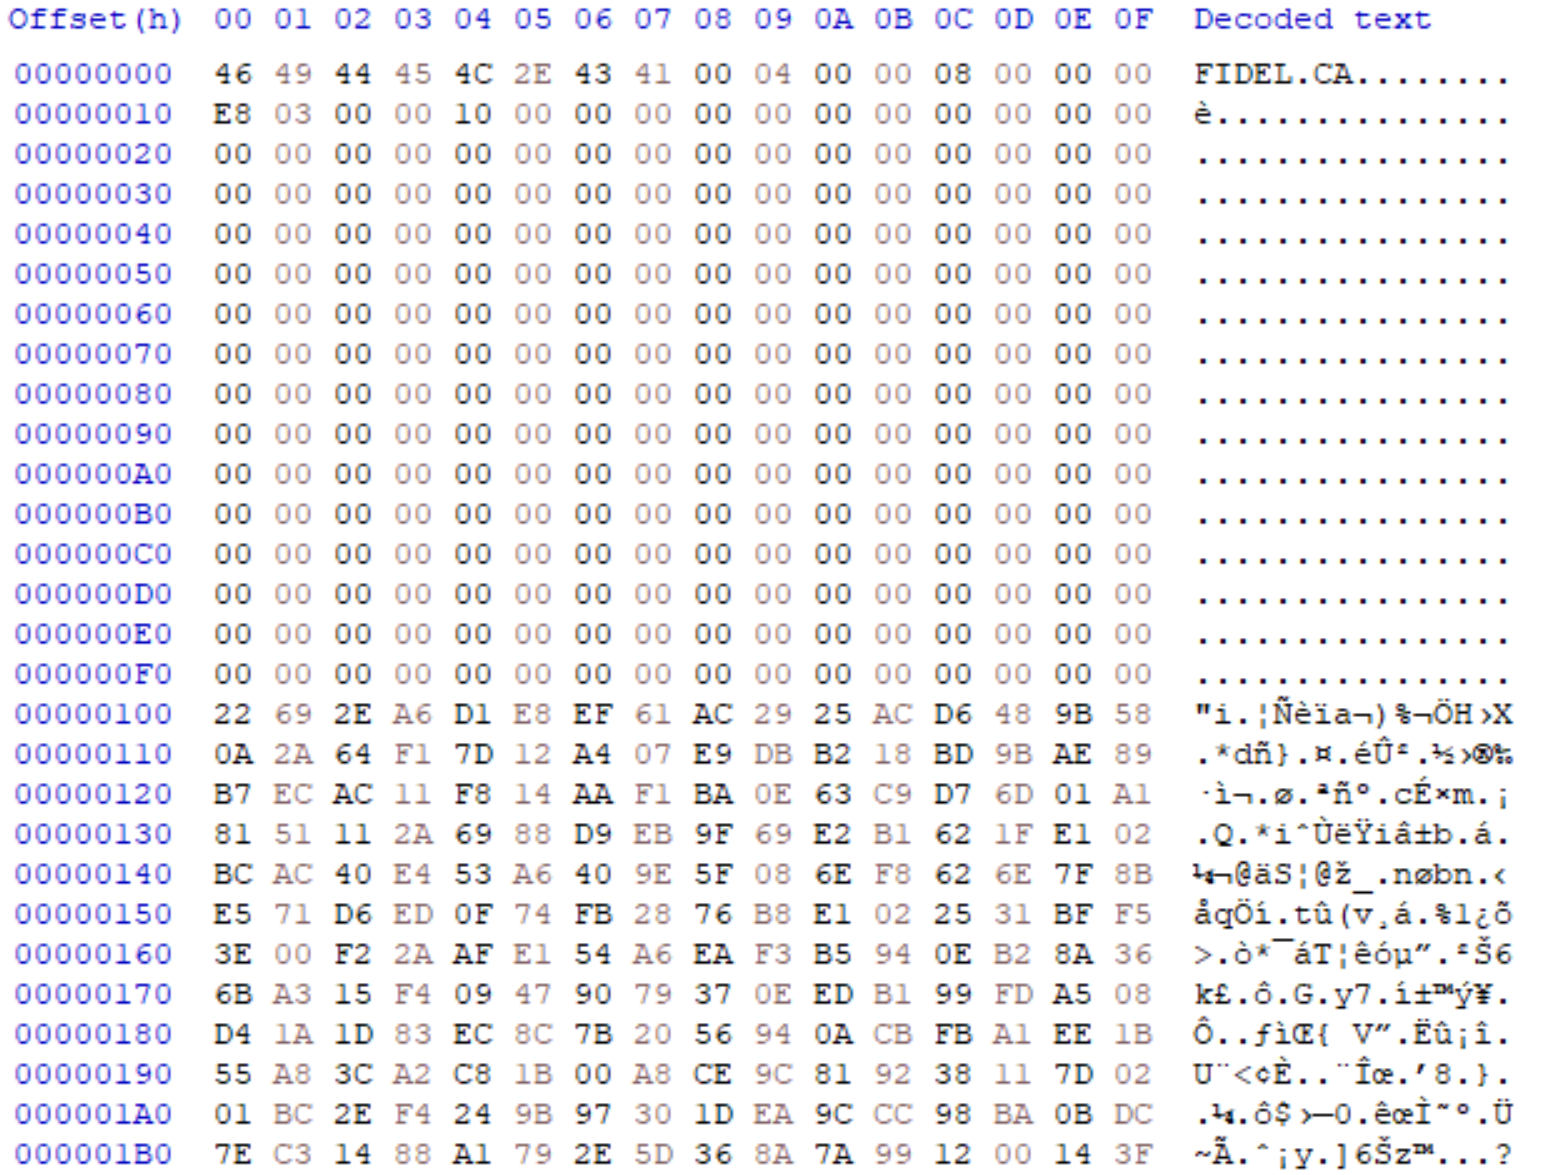 FIDEL.CAのマジックナンバーの後に暗号化されたRSAのブロブが続く 